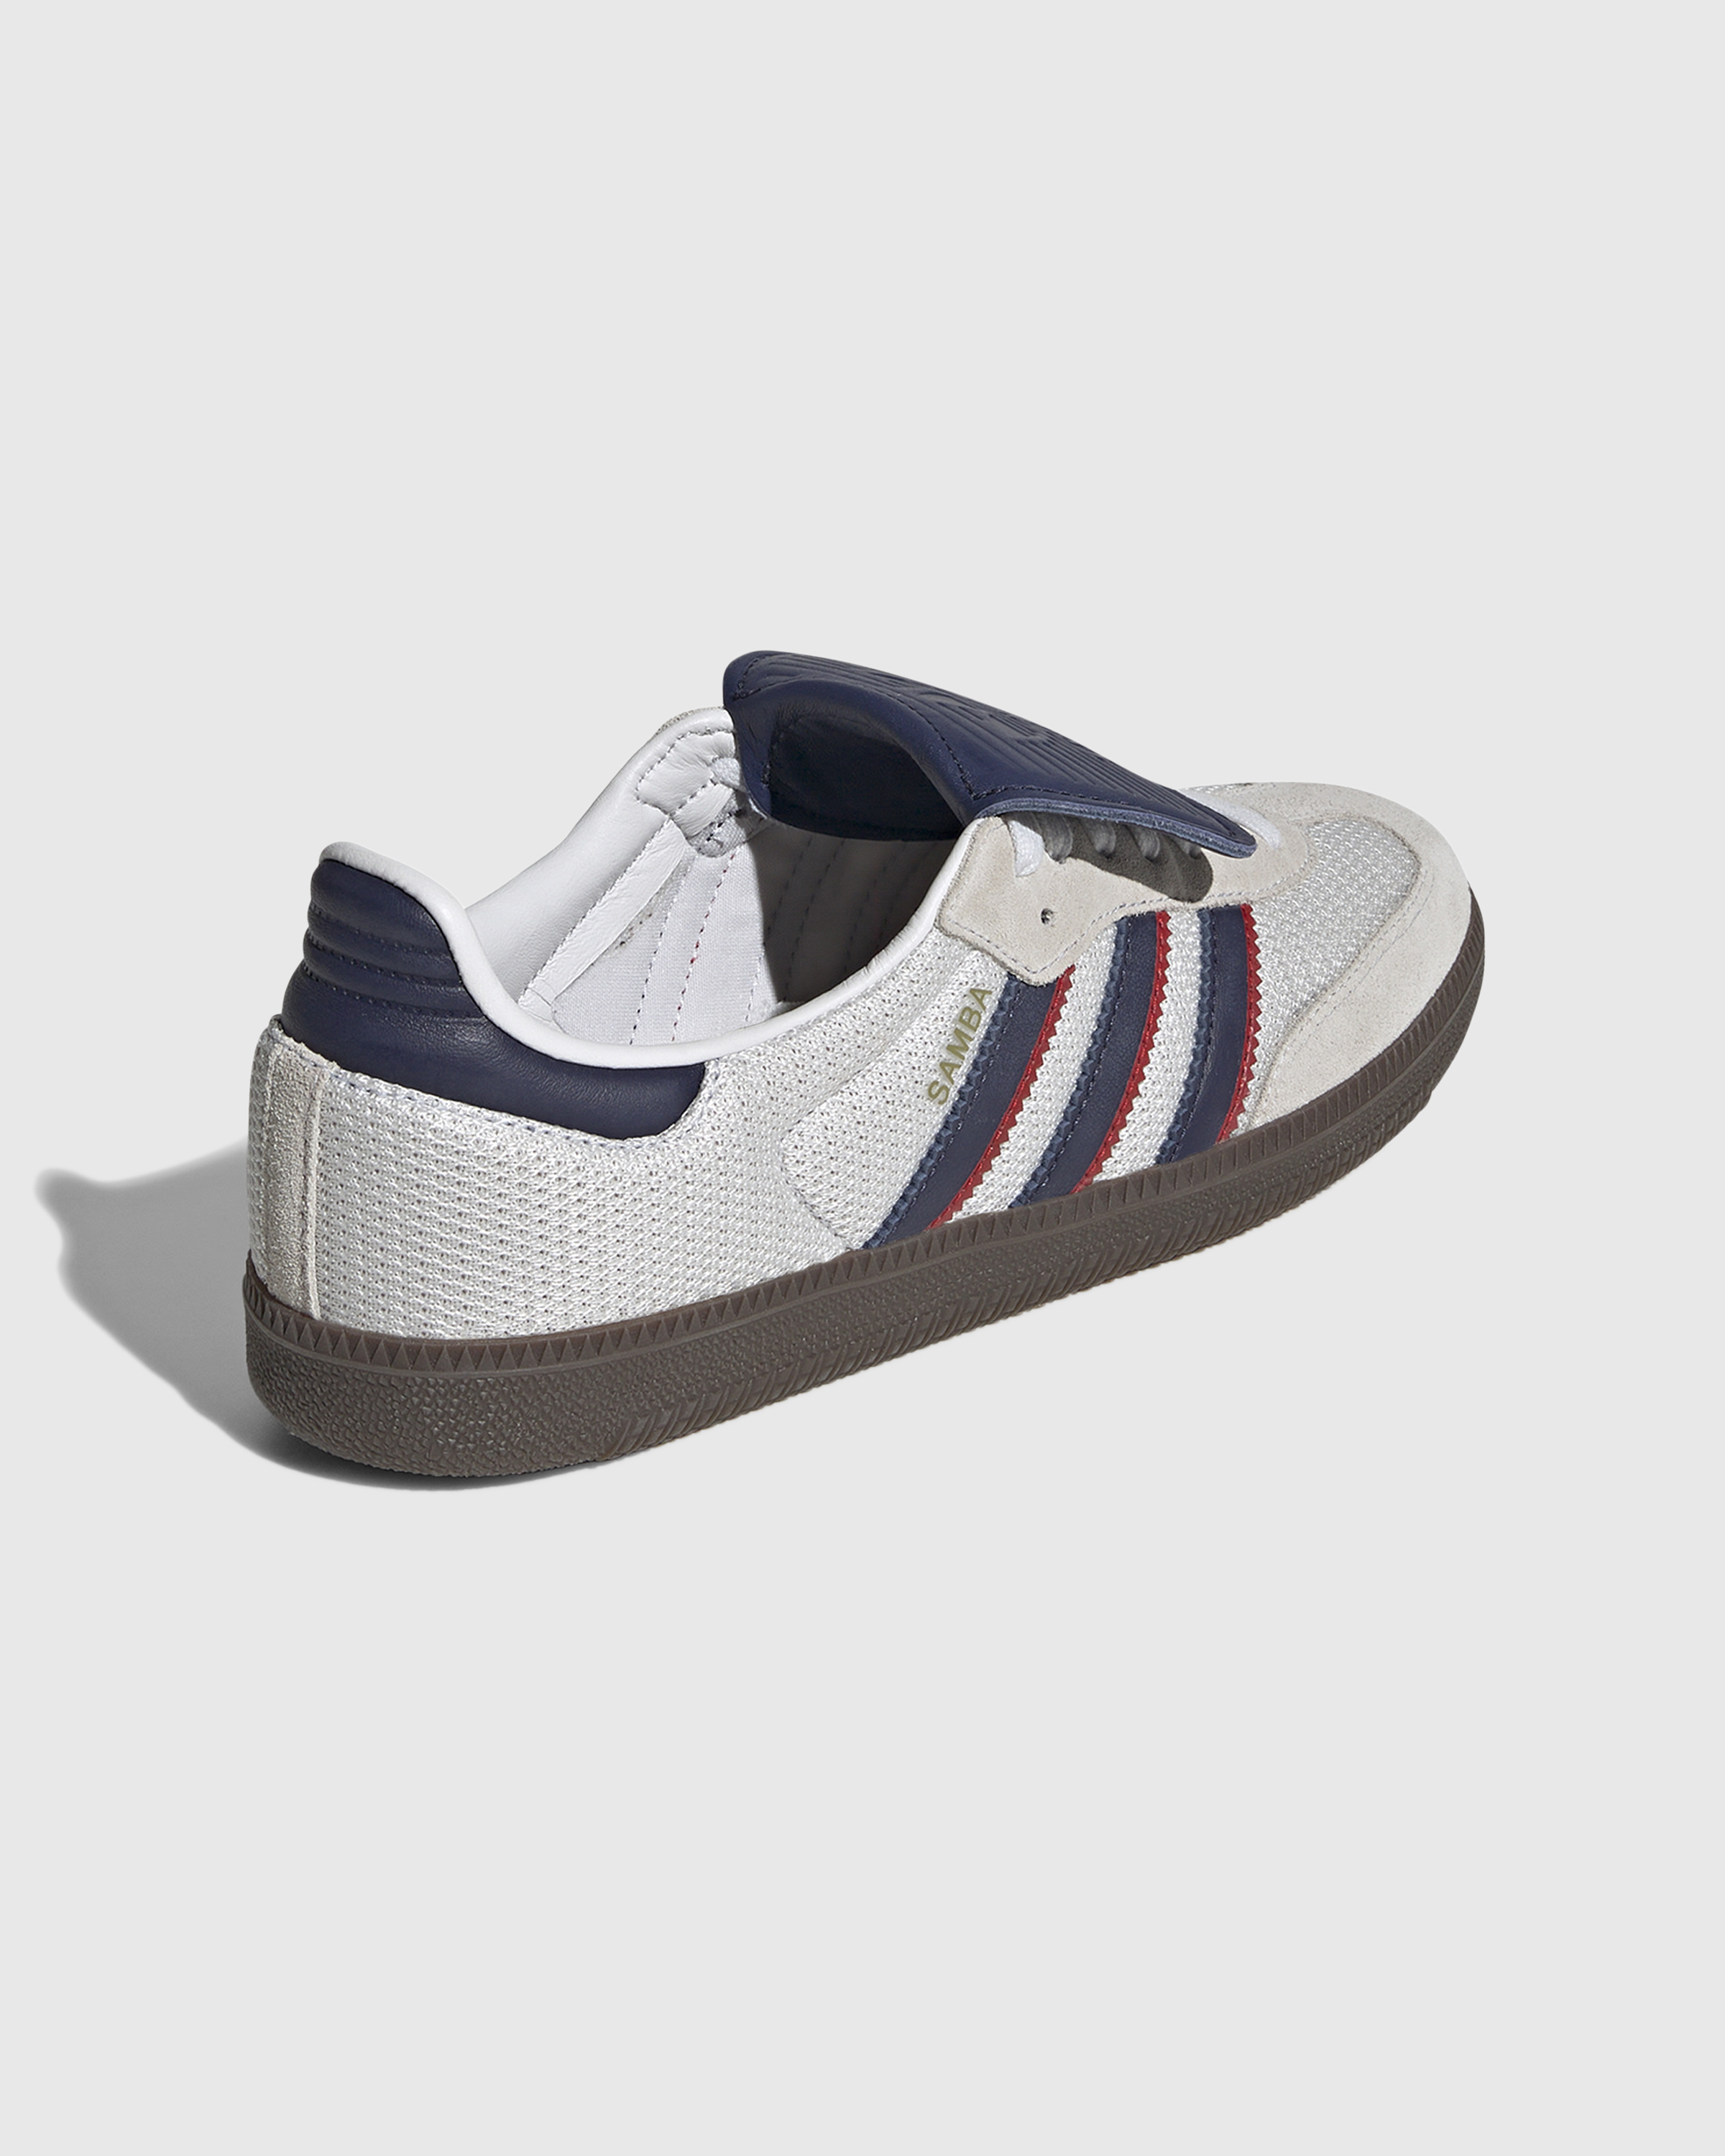 Adidas – Samba LT White/Blue/Gum - Low Top Sneakers - White - Image 4